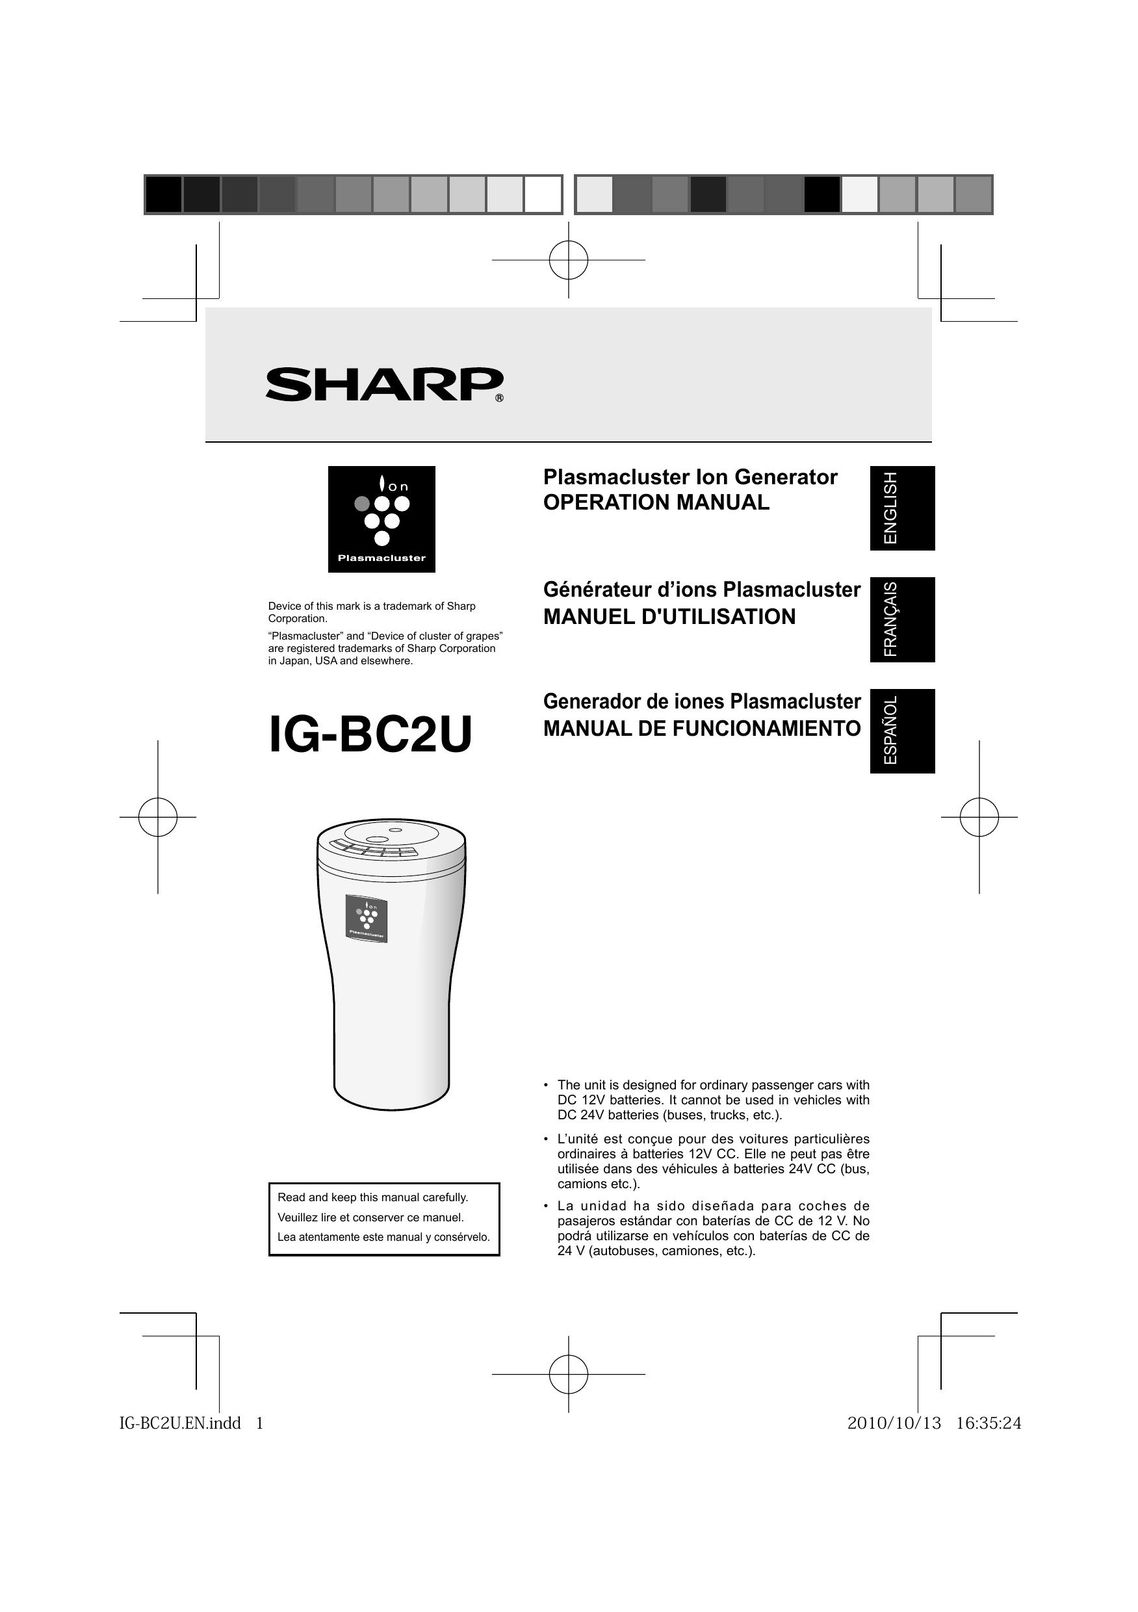 Sharp IG-BC2U Air Cleaner User Manual